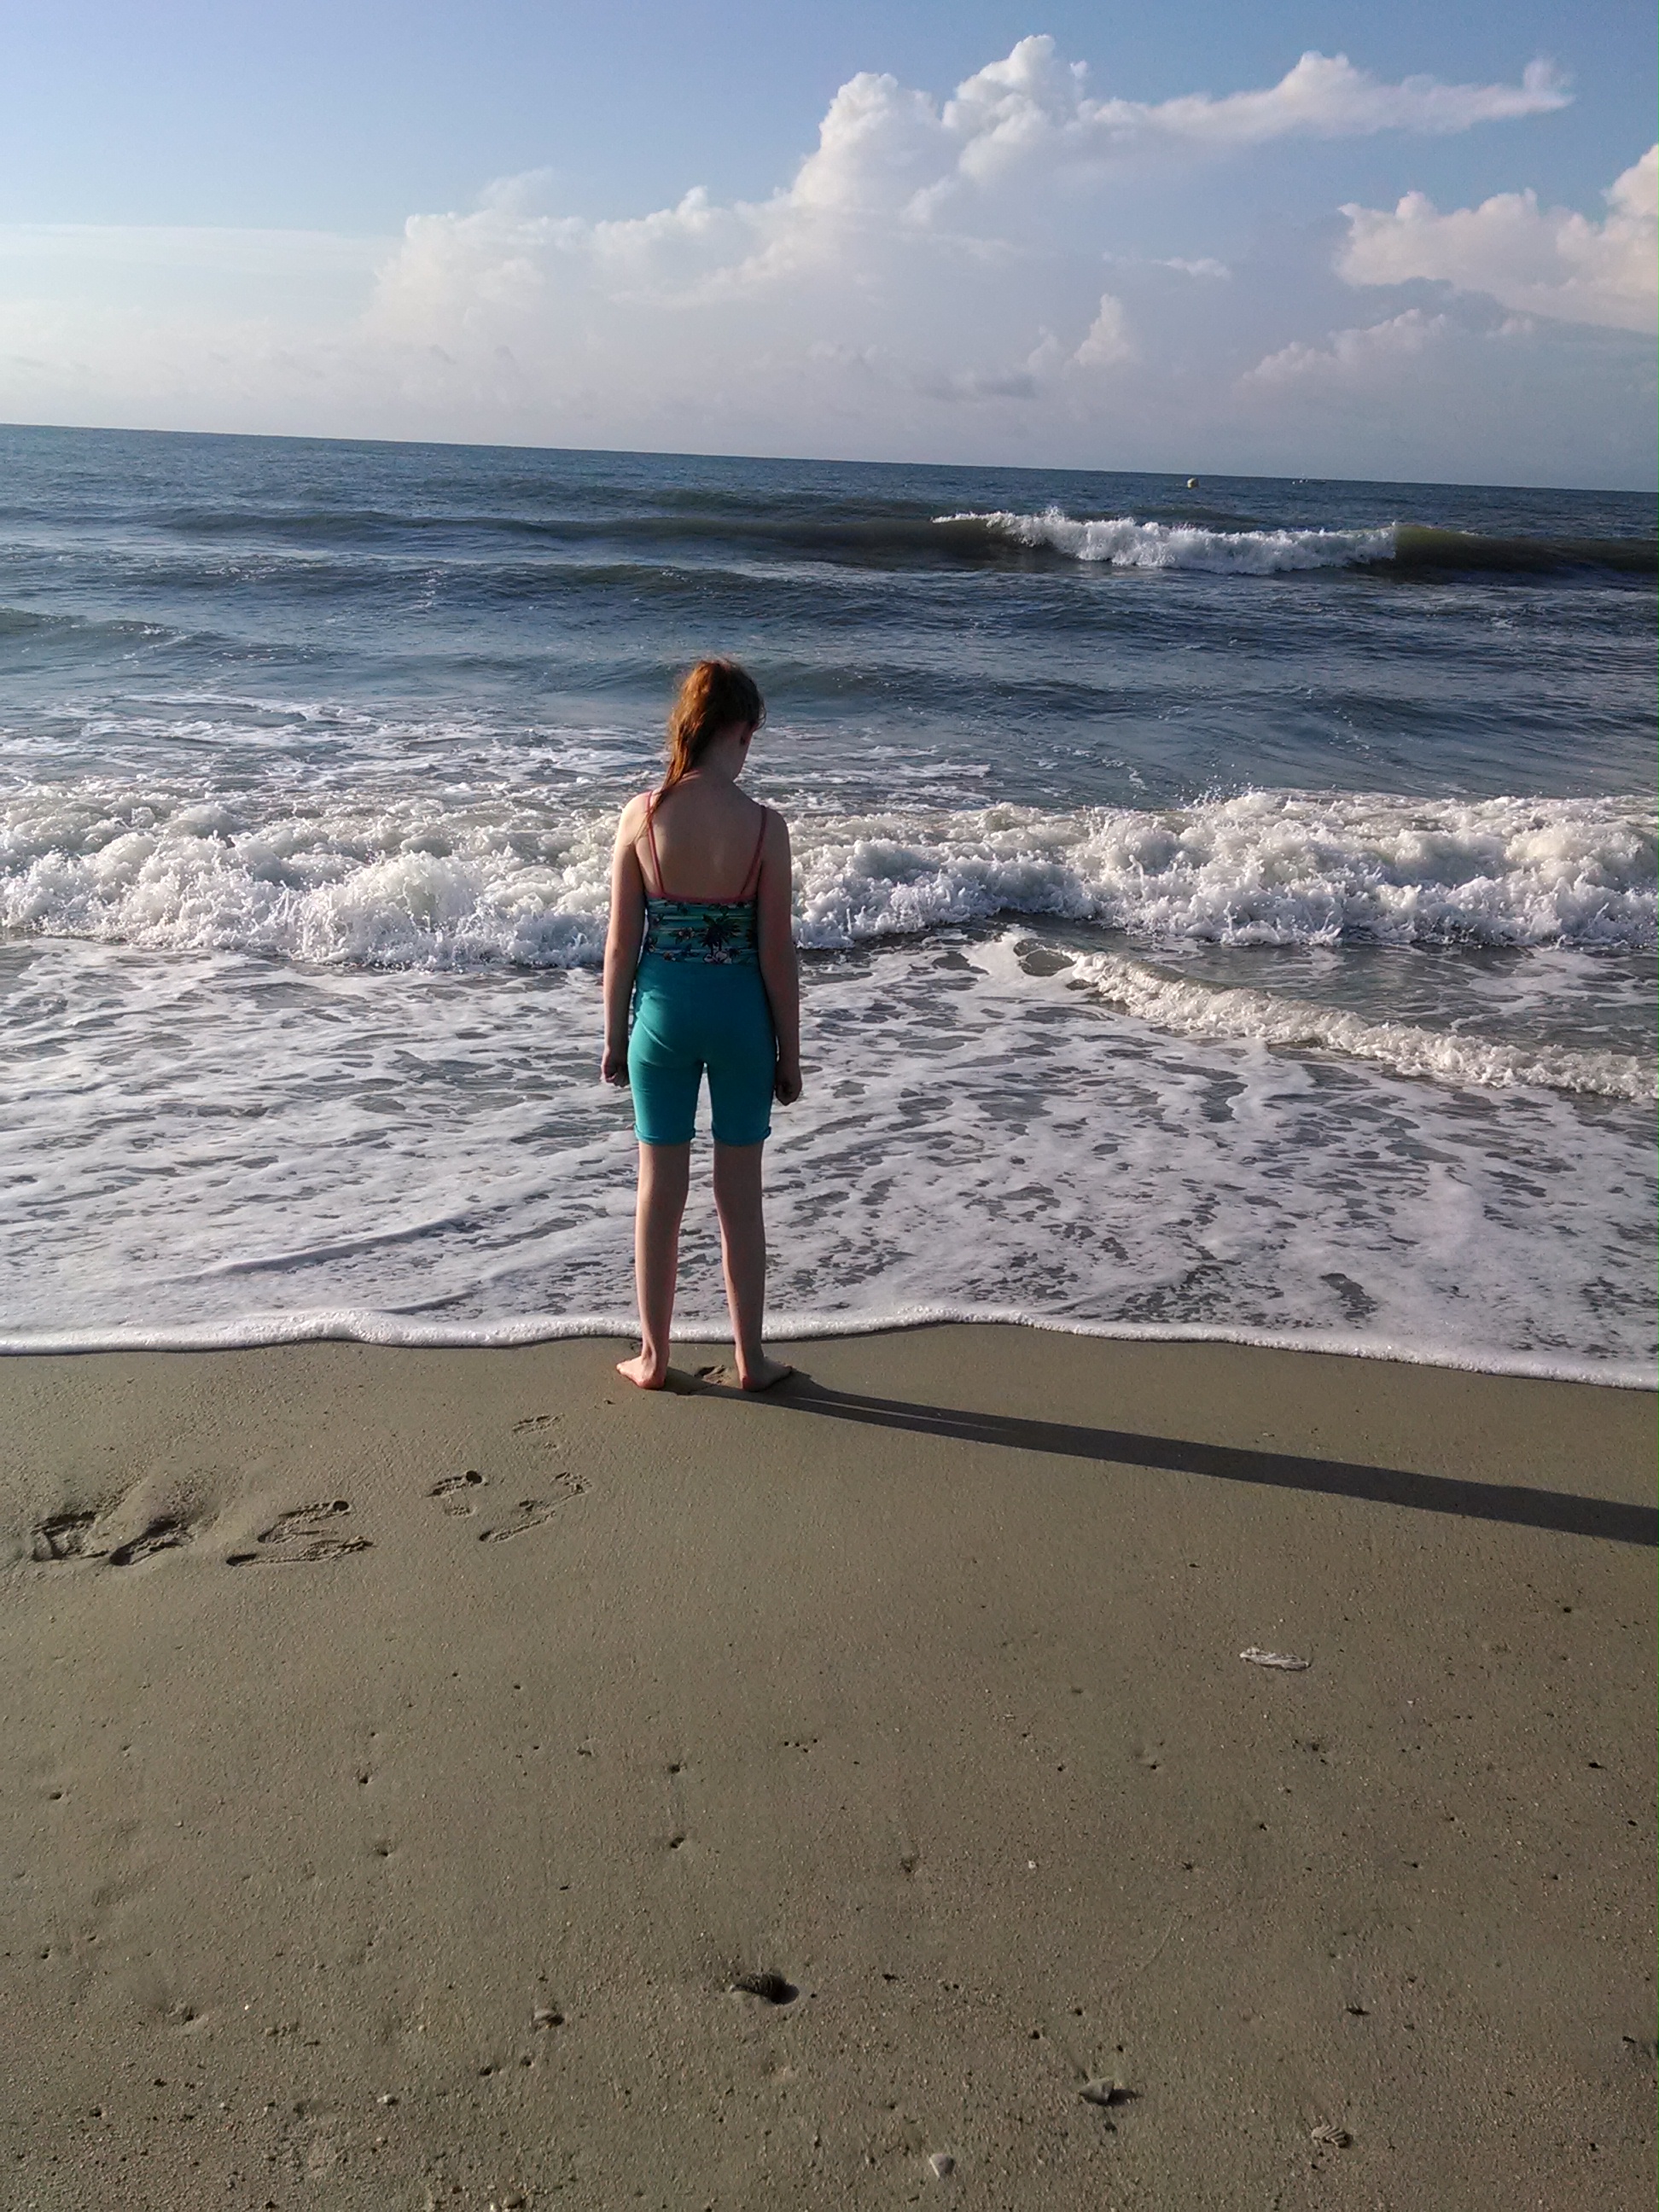 Anna at the ocean shore